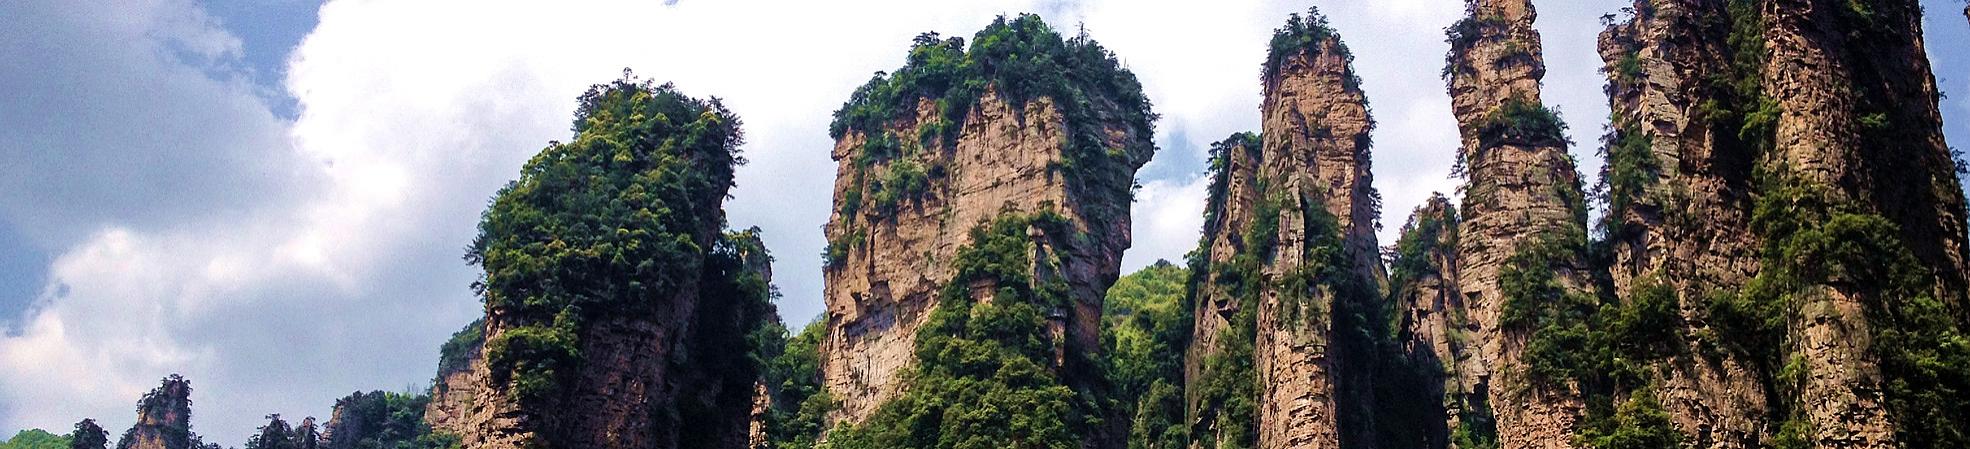 Haunting Hunan: Zhangjiajie with Avatar Mountains and Beyond